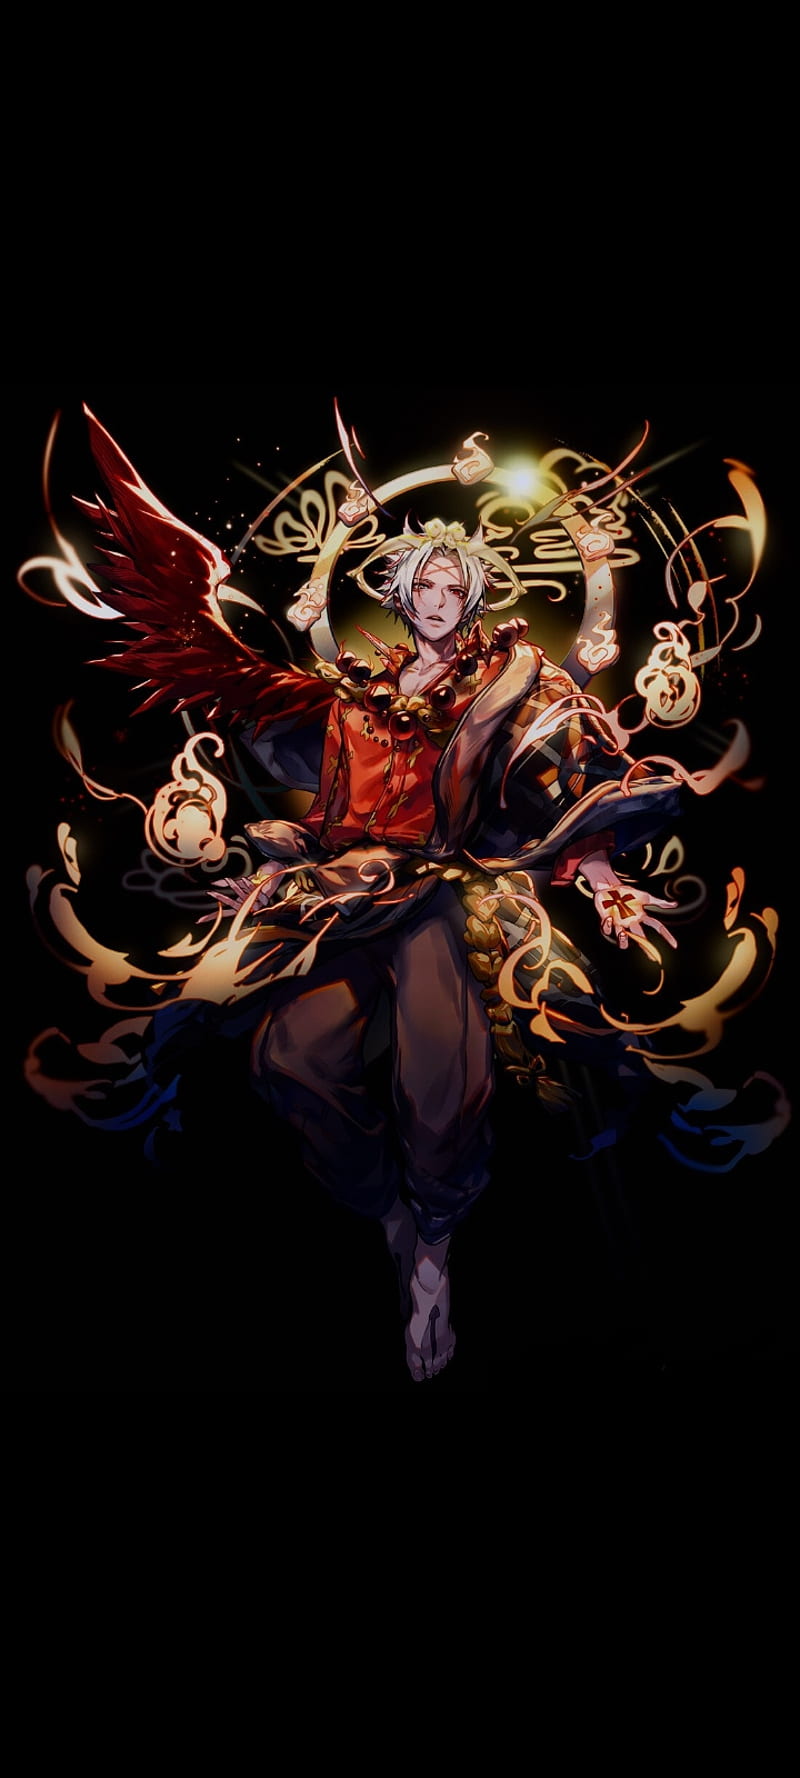 Wallpaper ID: 383466 / Anime The God of High School, Jin Mori, 1080x1920  Phone Wallpaper